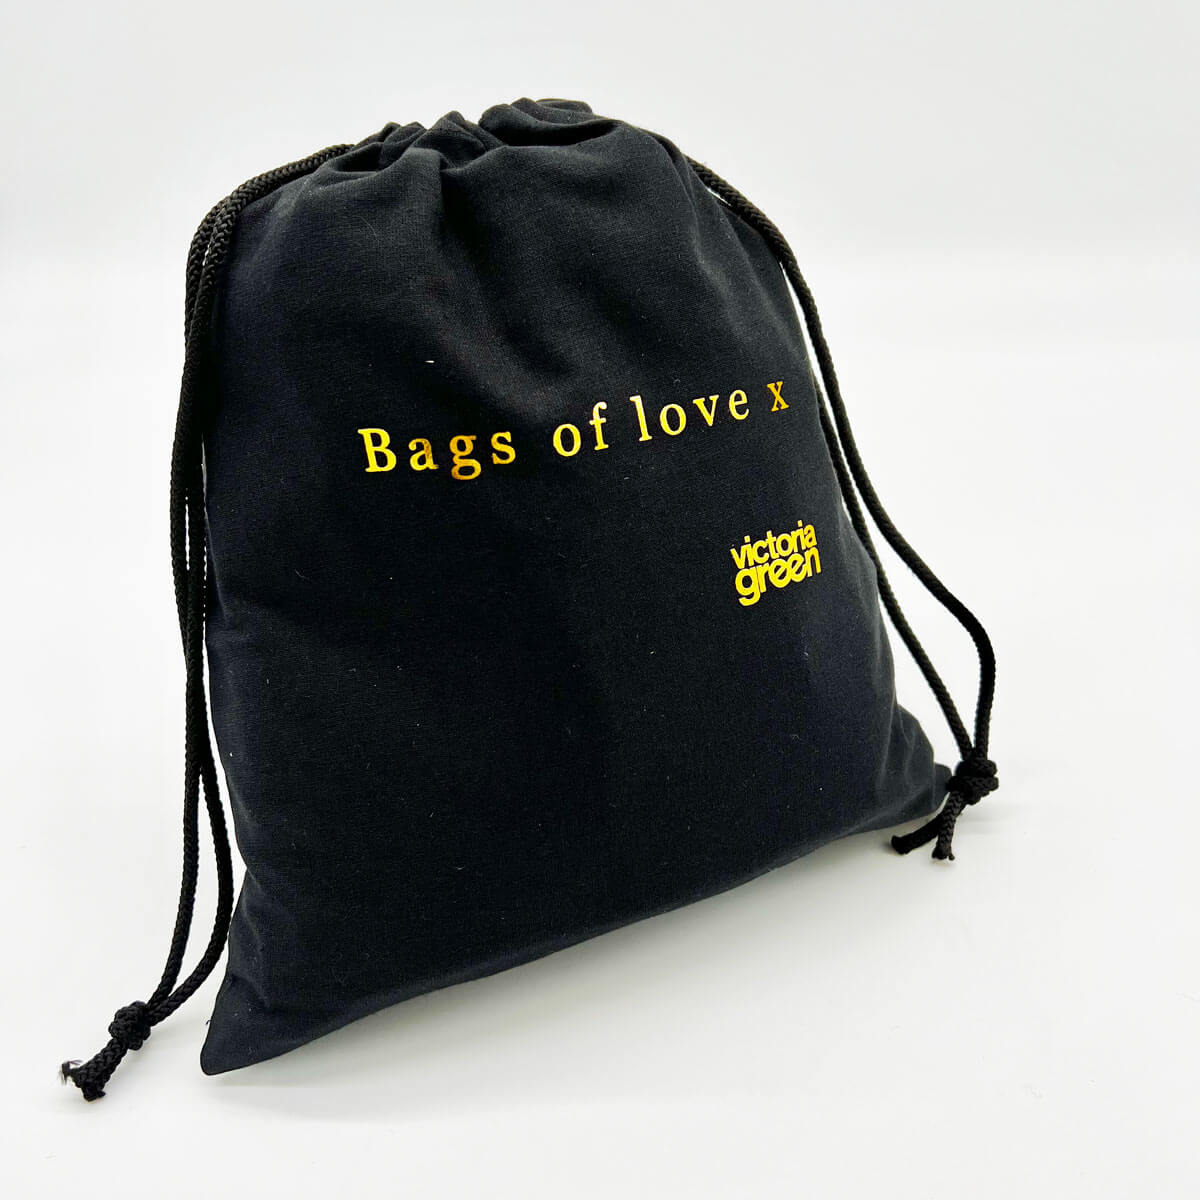 Victoria Green Gift Bag